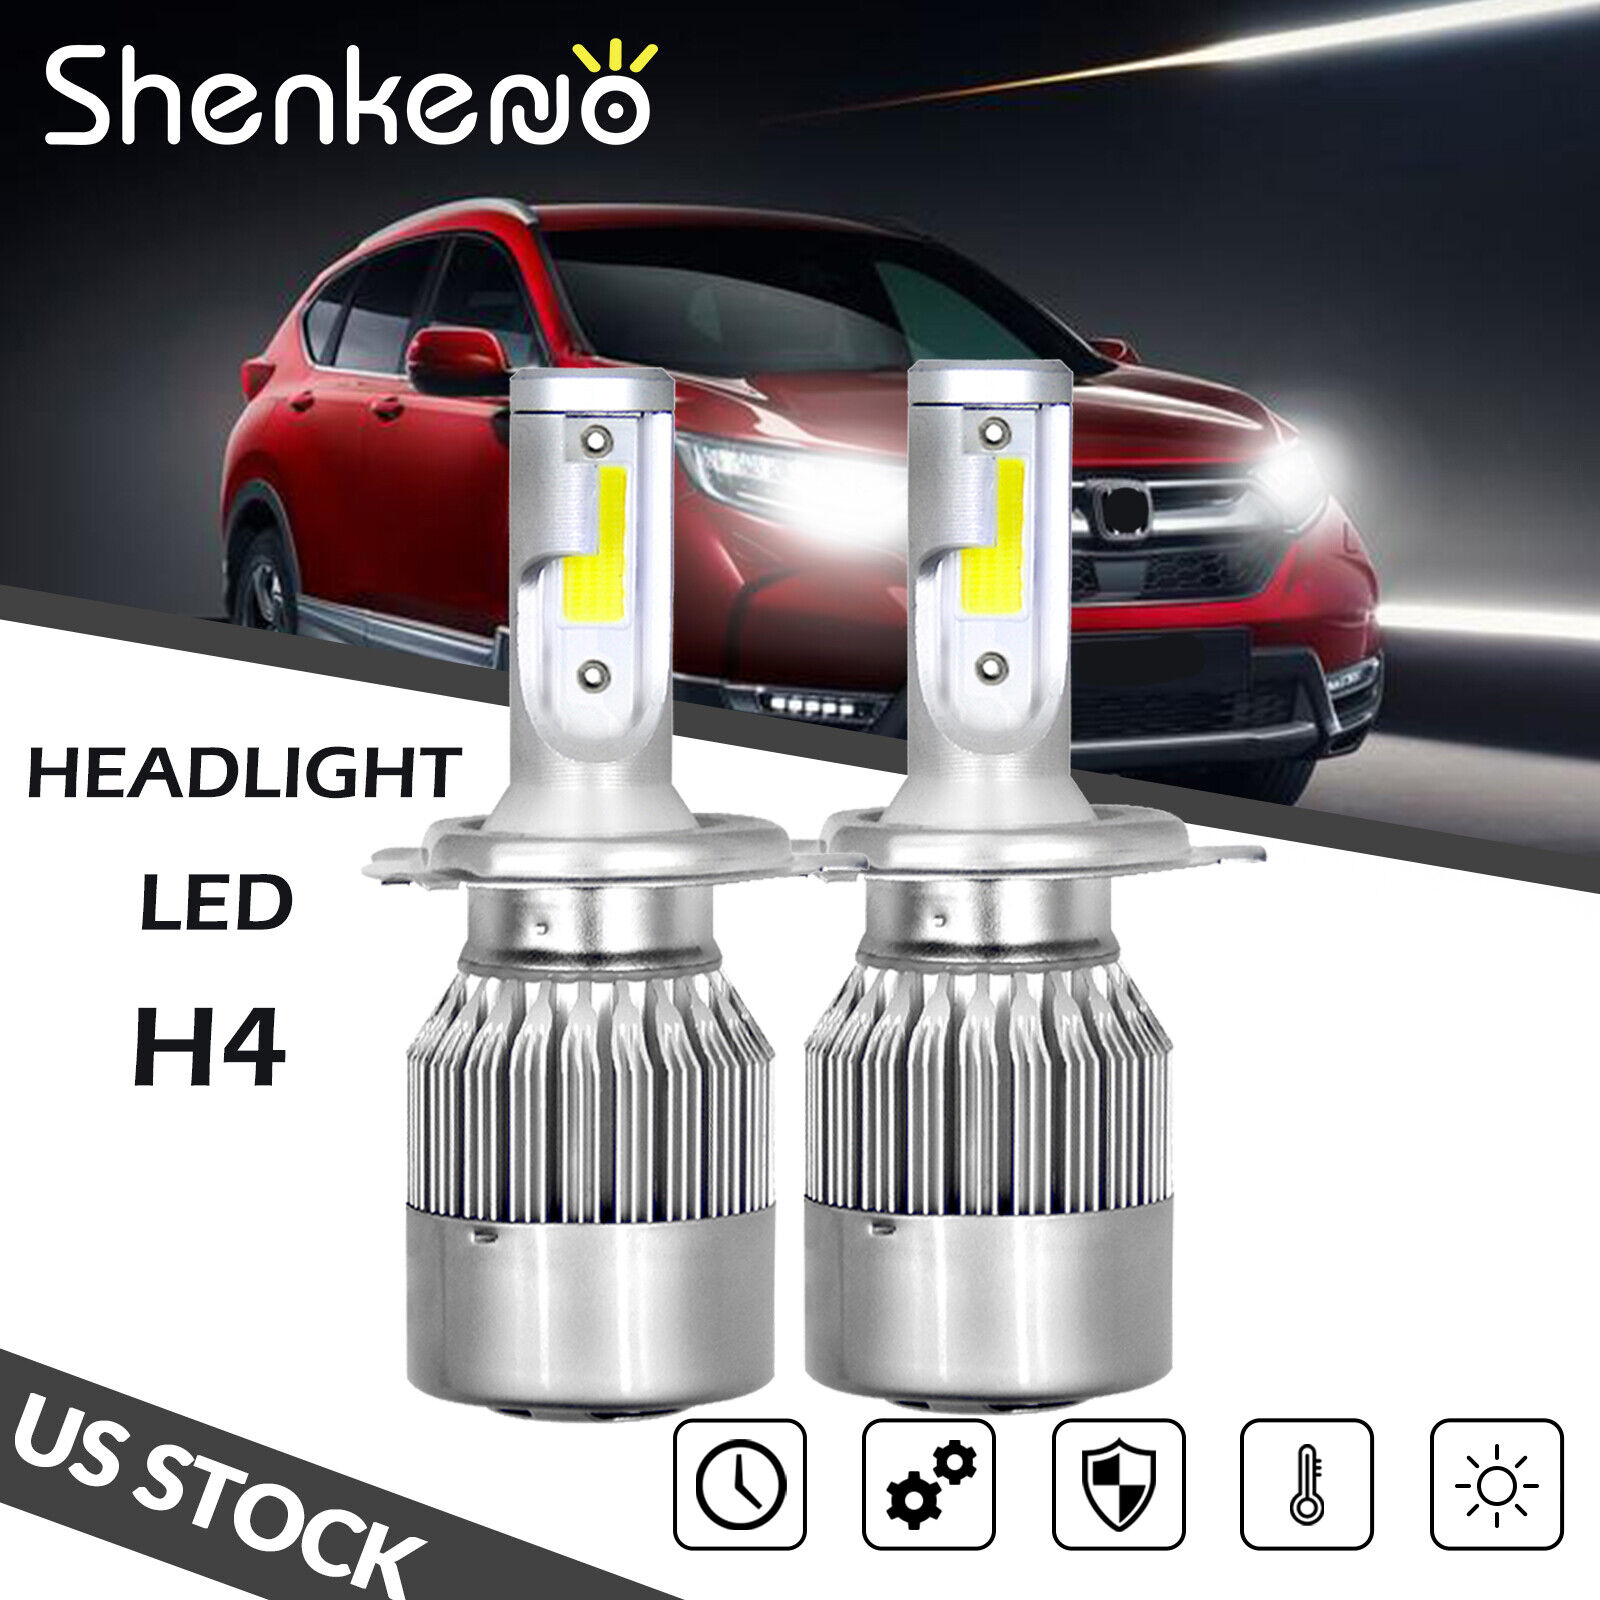 2X LED Headlight Bulbs For Honda CRV 1997-2014 High & Low Beam and Plug &Play US